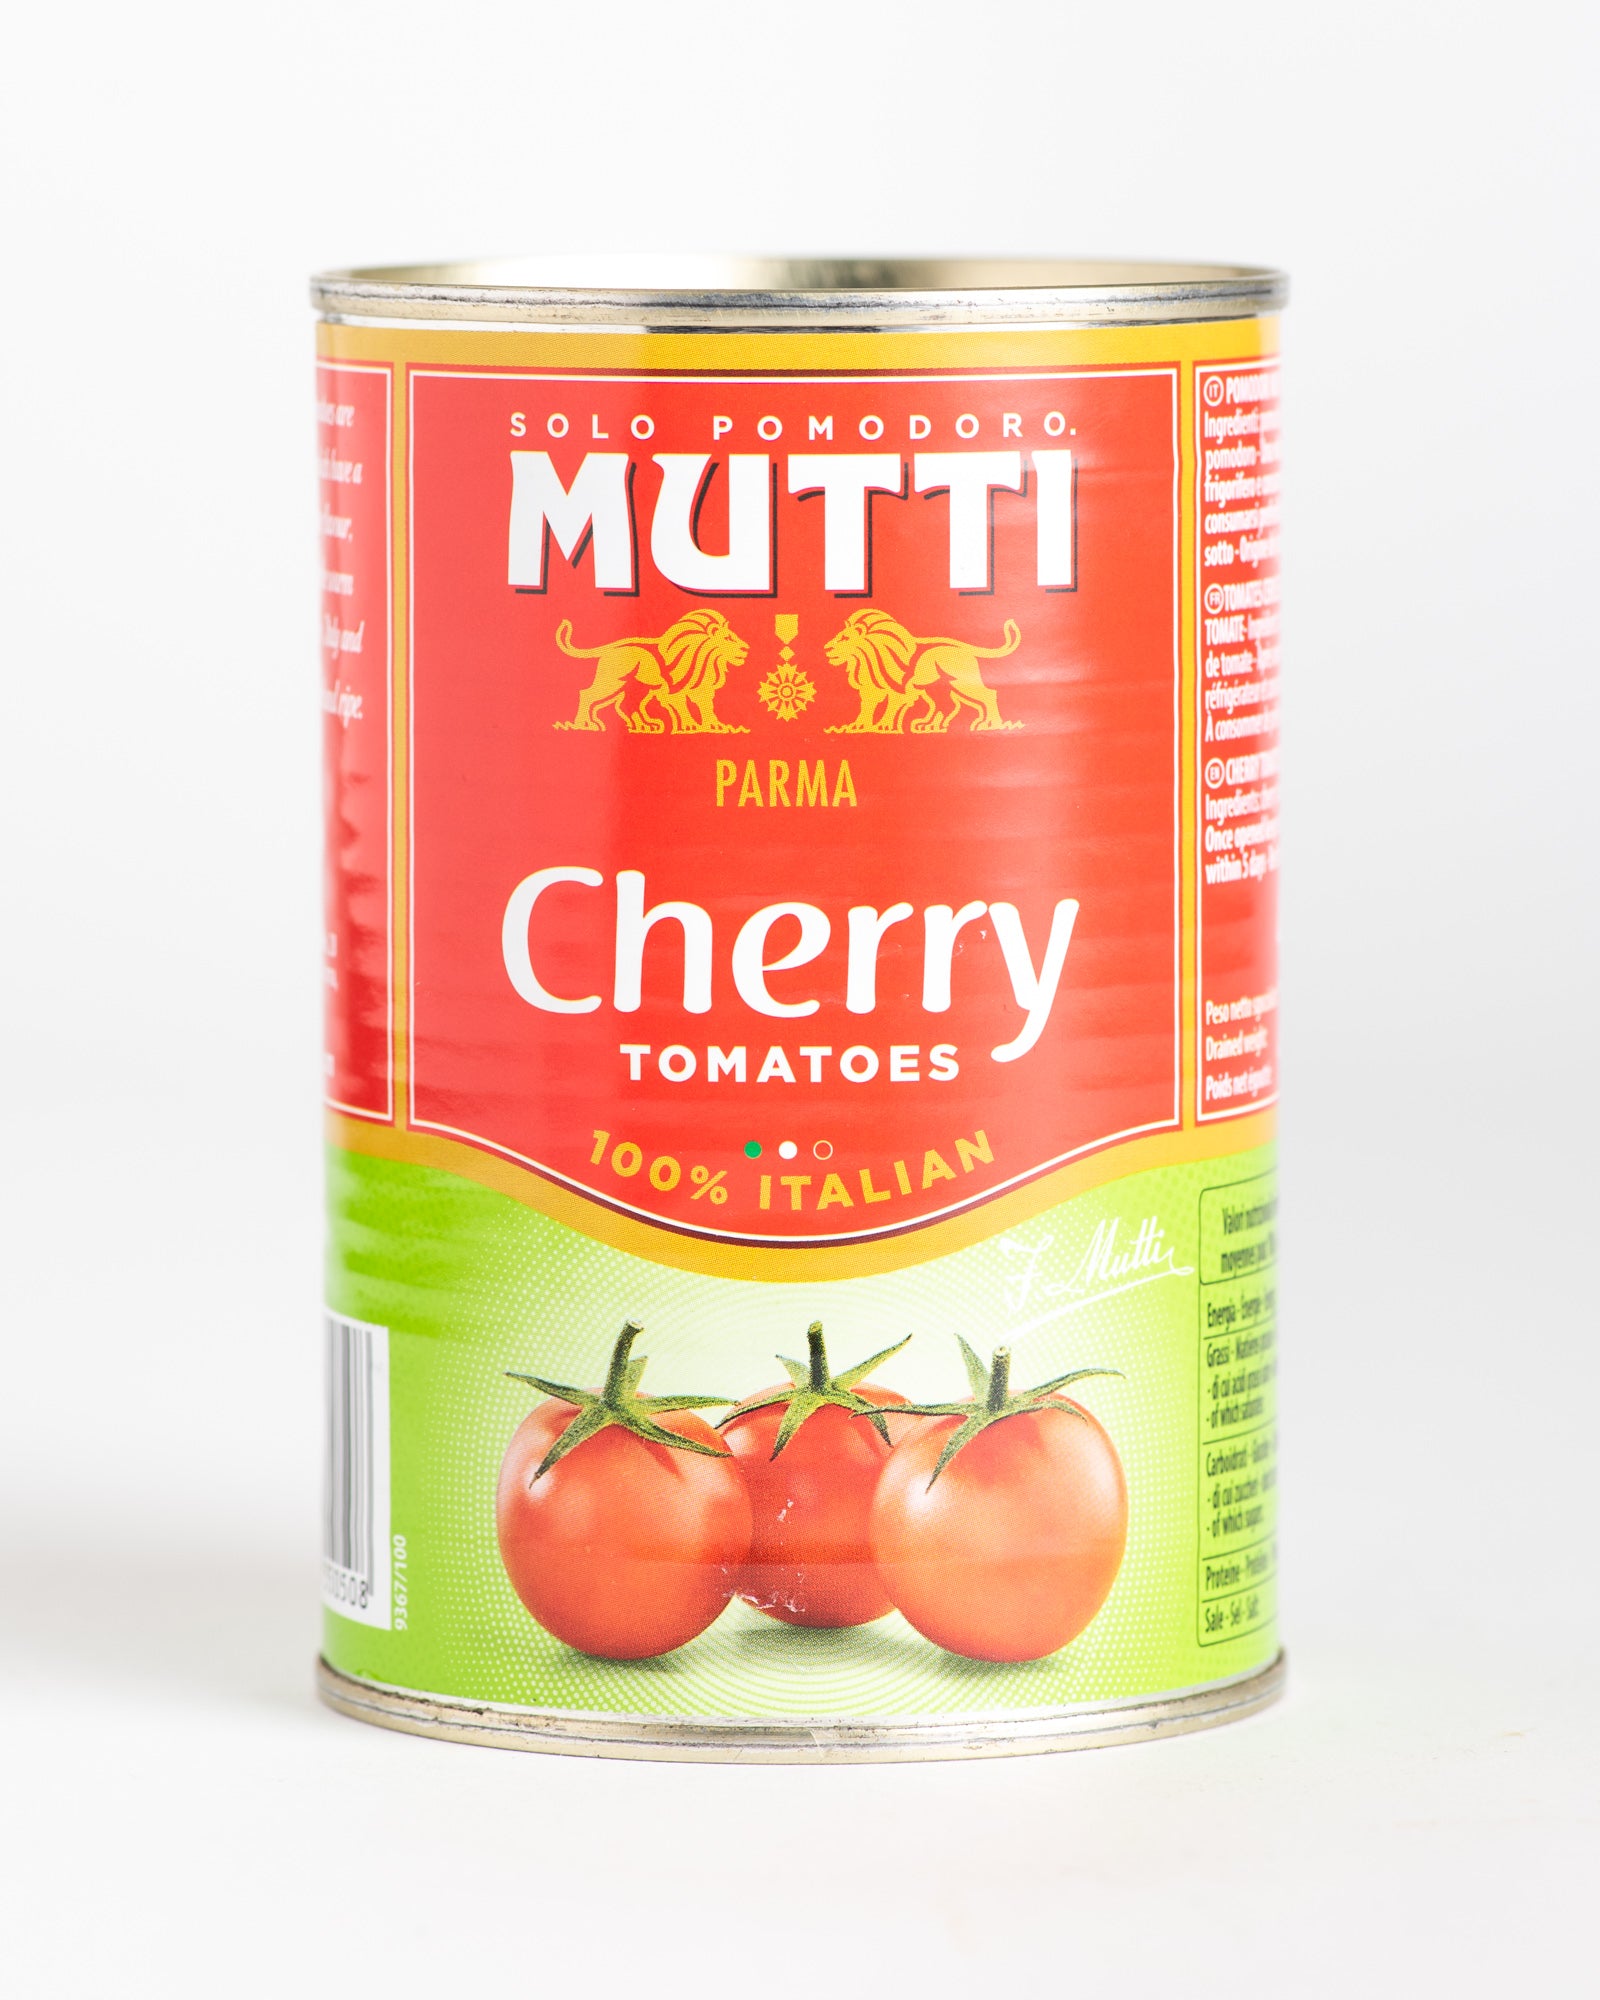 Mutti - Polpa Finely Chopped Tomatoes – French Village Bakery